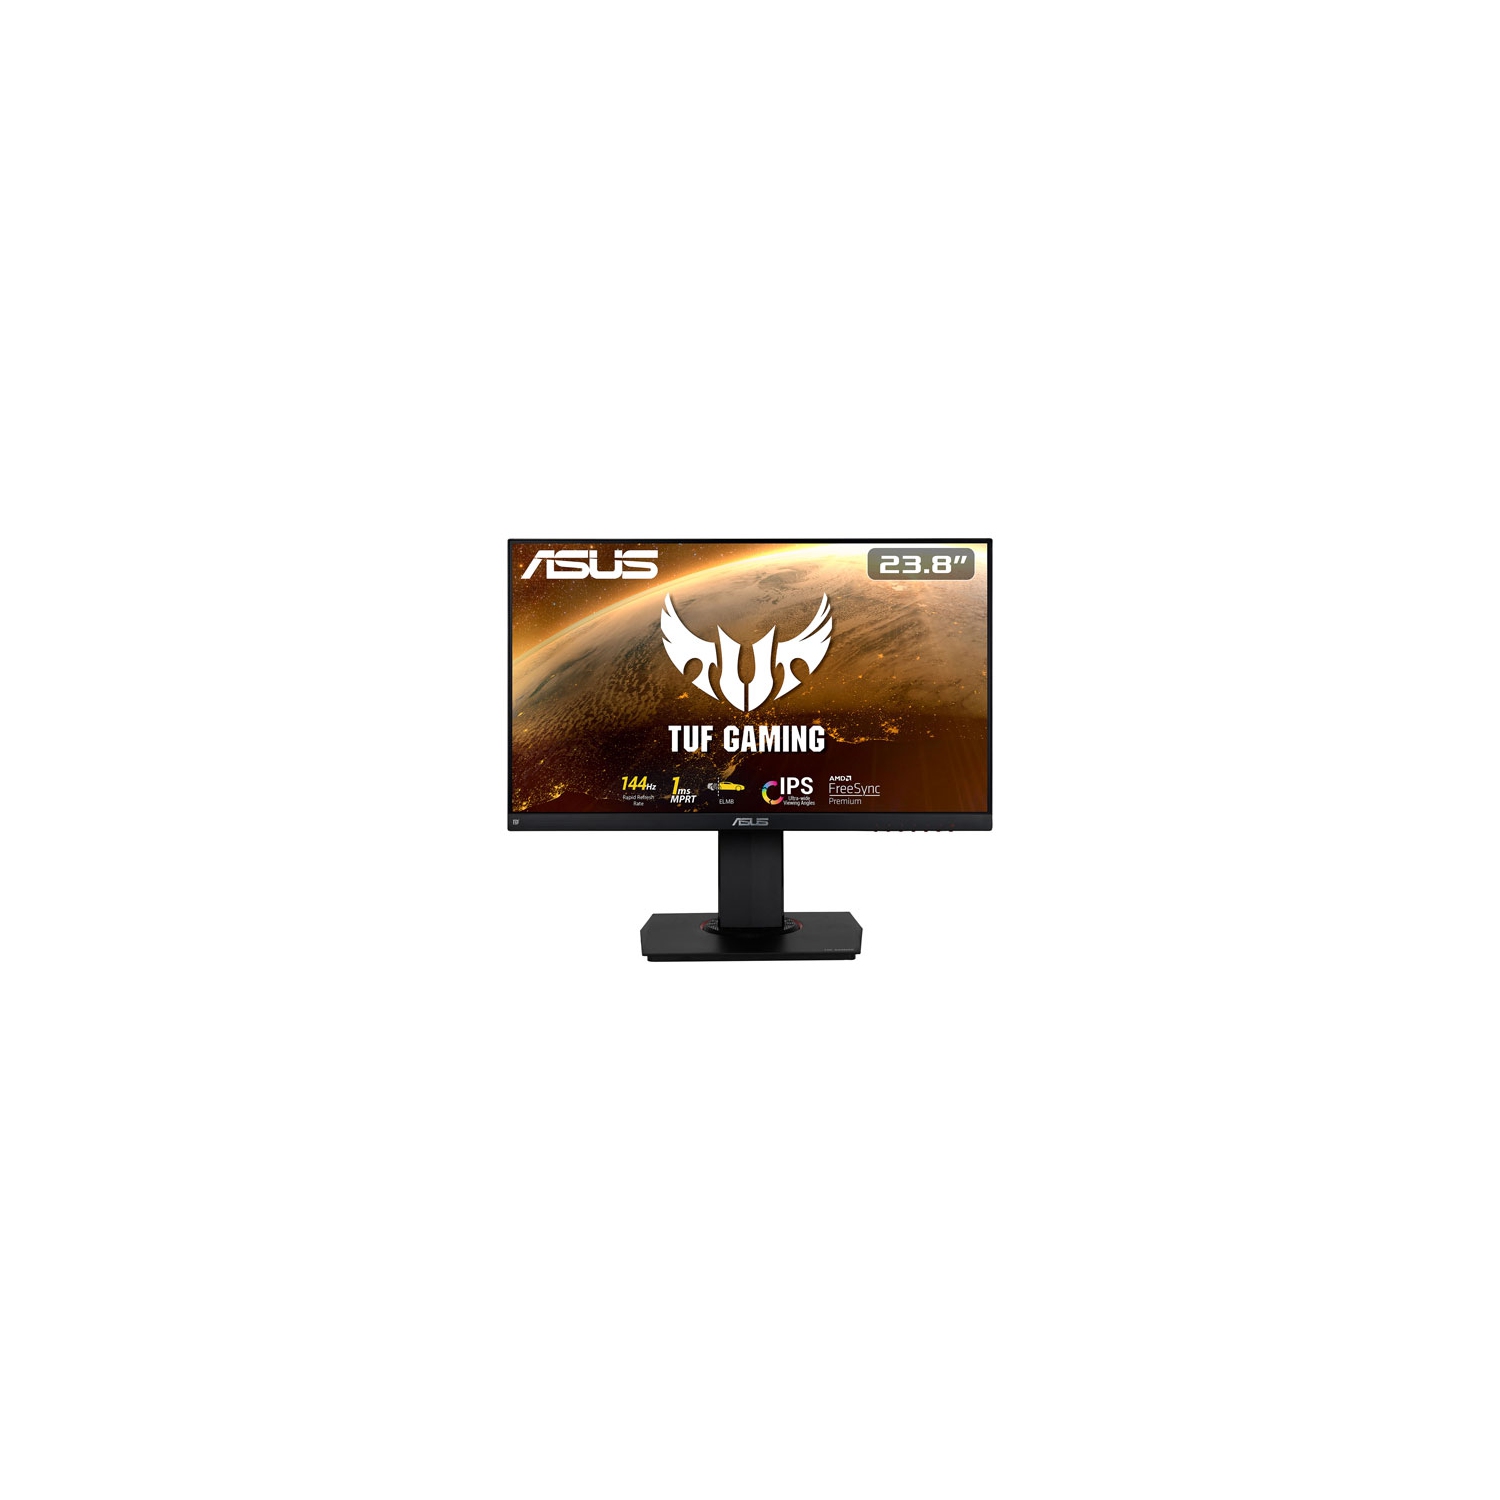 ASUS TUF 24" FHD 144Hz 1ms GTG IPS LED FreeSync Gaming Monitor (VG249Q) - Black - Open Box